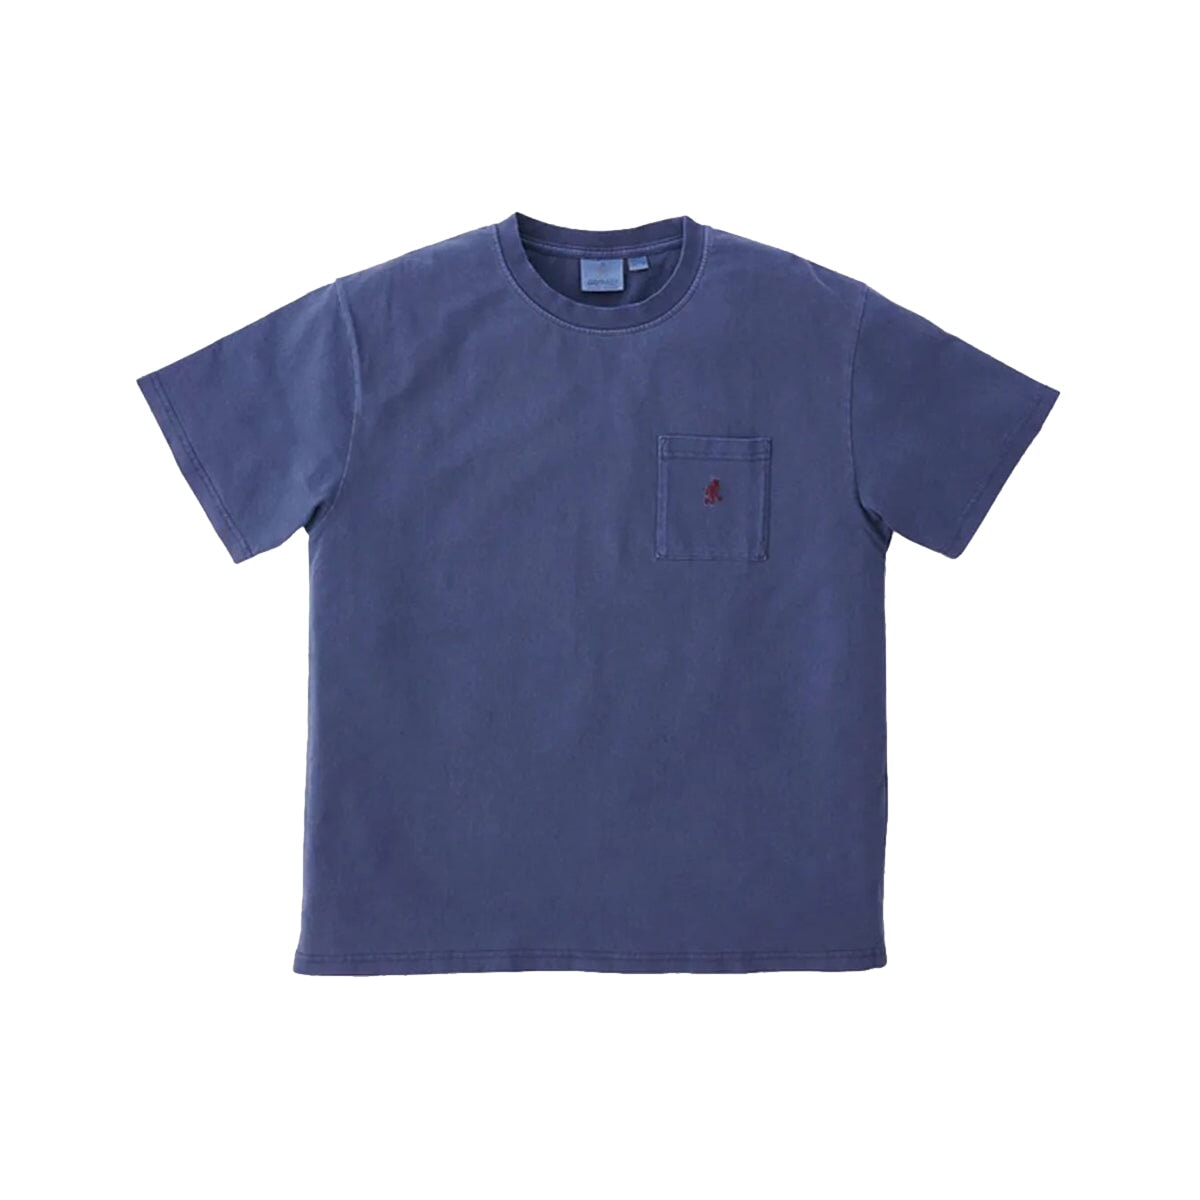 Gramicci One Point Tee - Navy Pigment T-Shirt Gramicci 